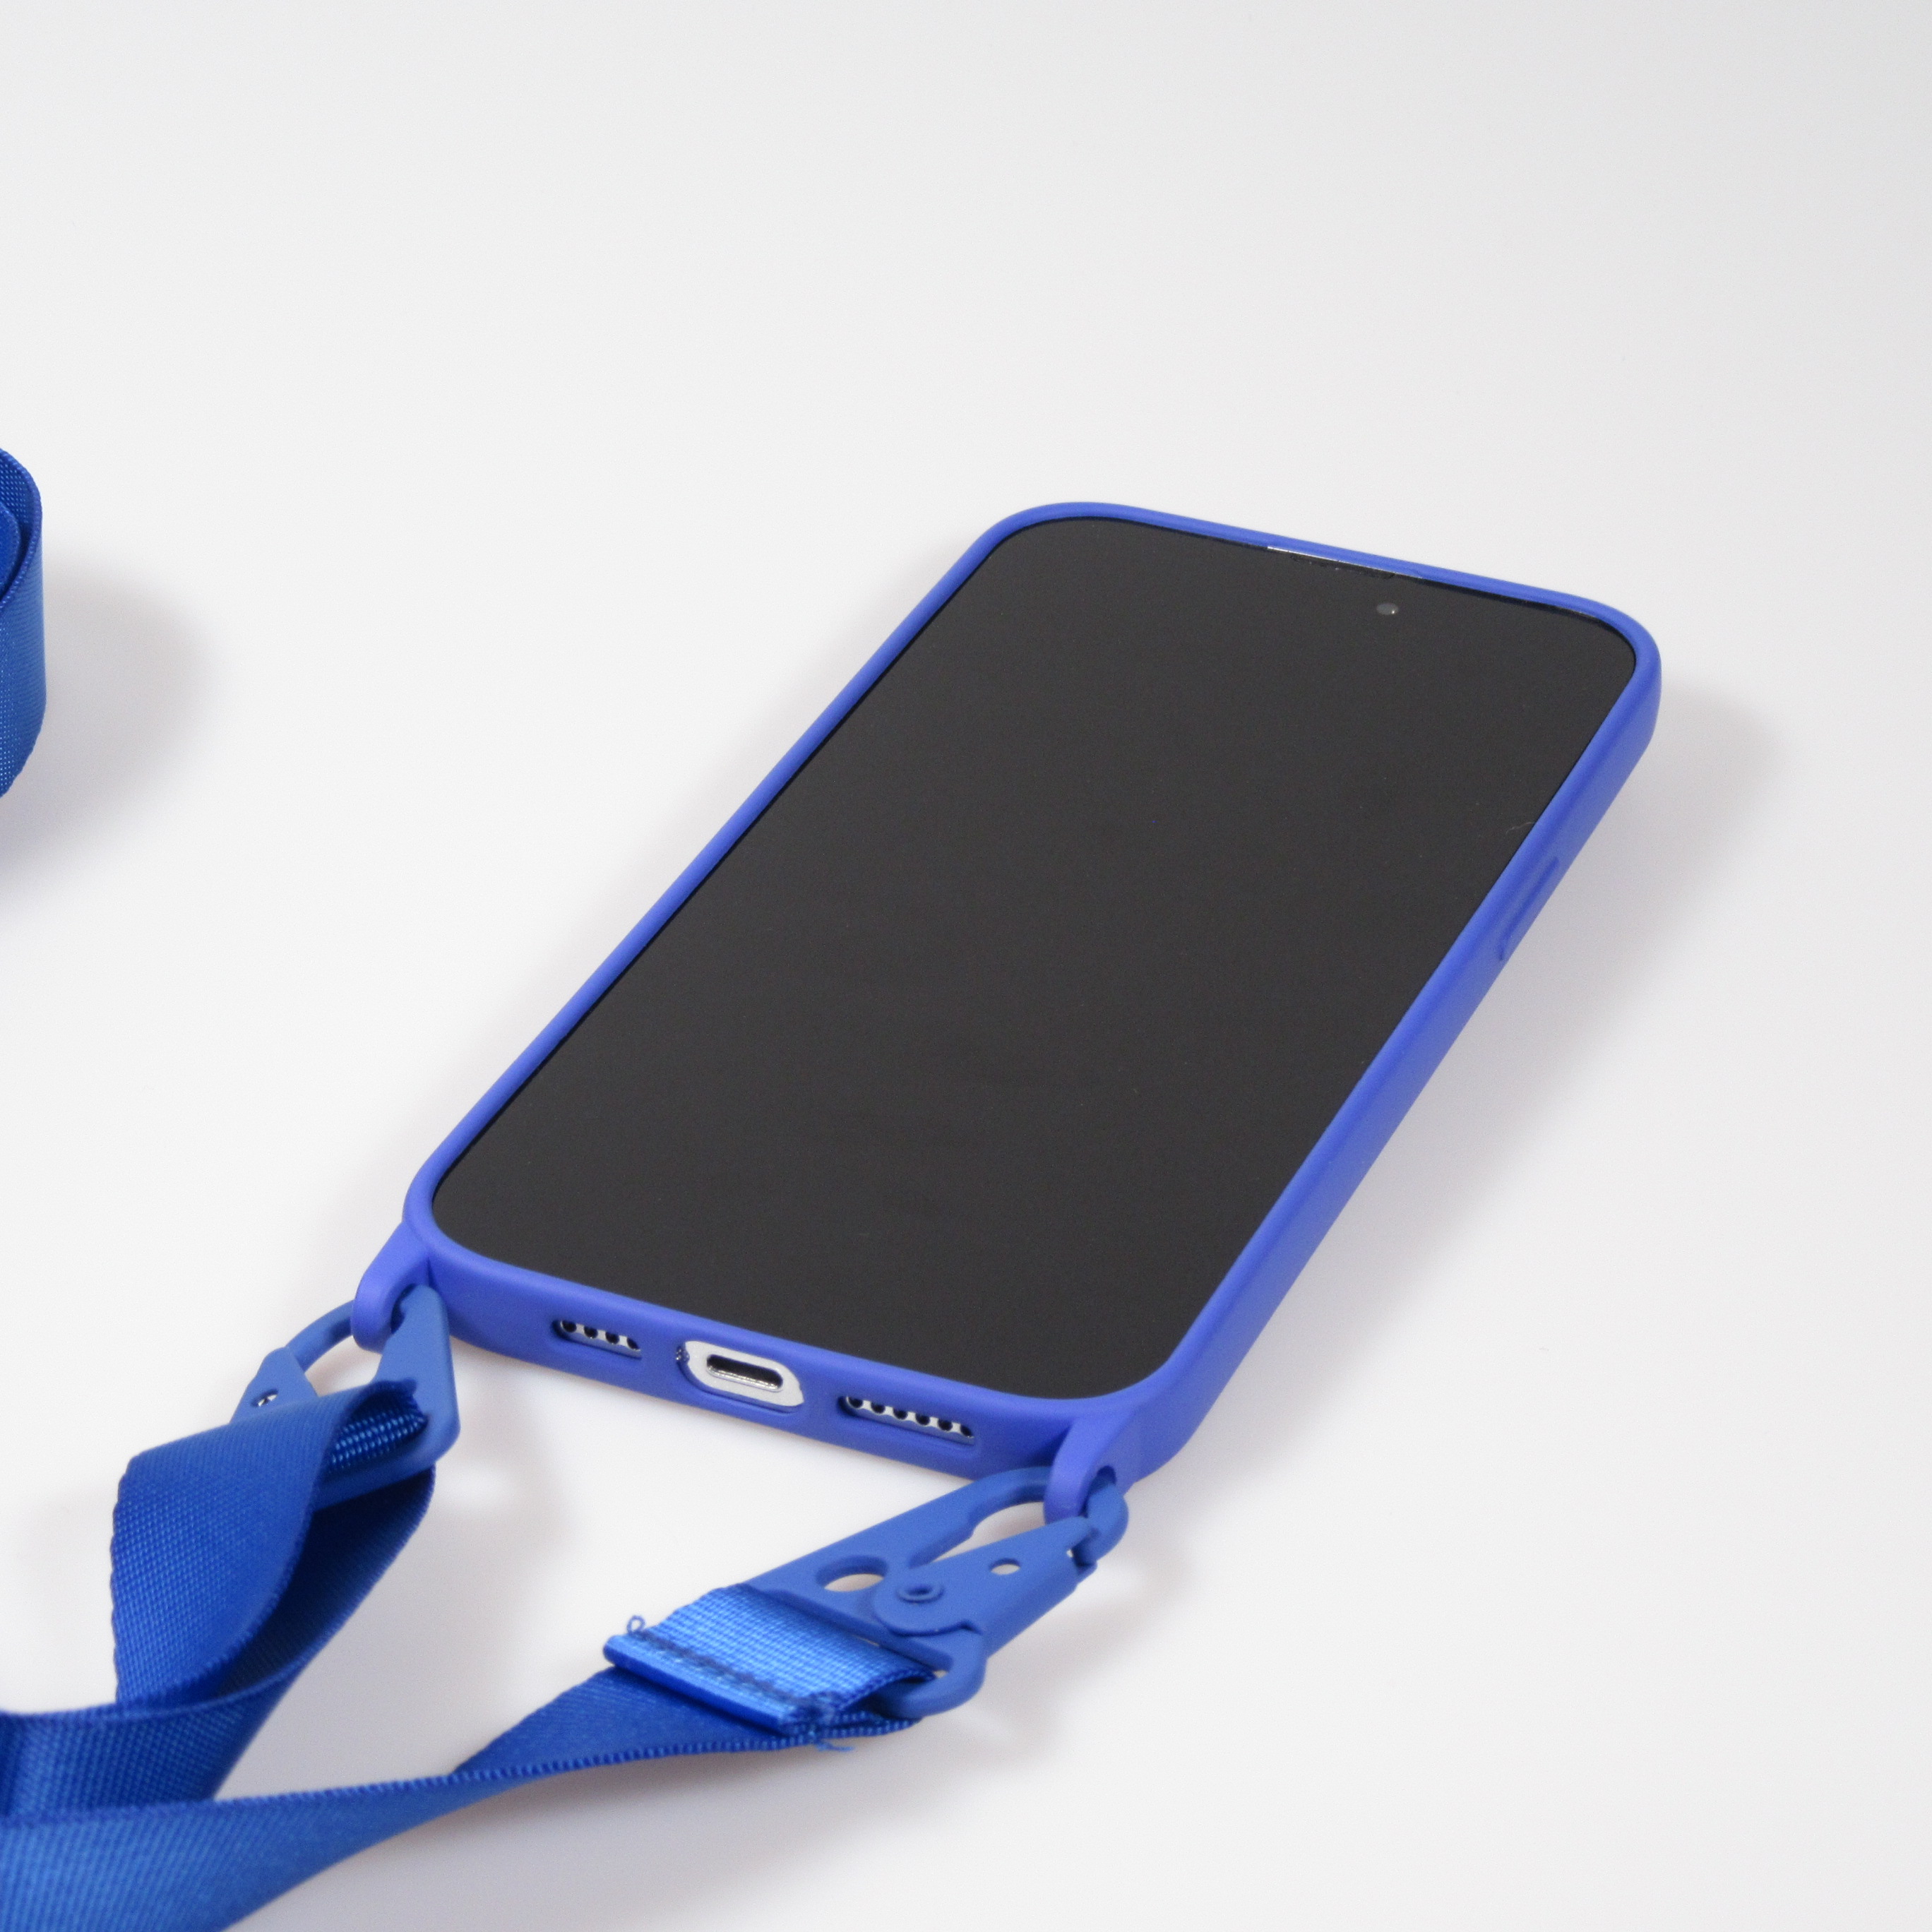 Coque iPhone 13 silicone couleur Bleu cobalt 